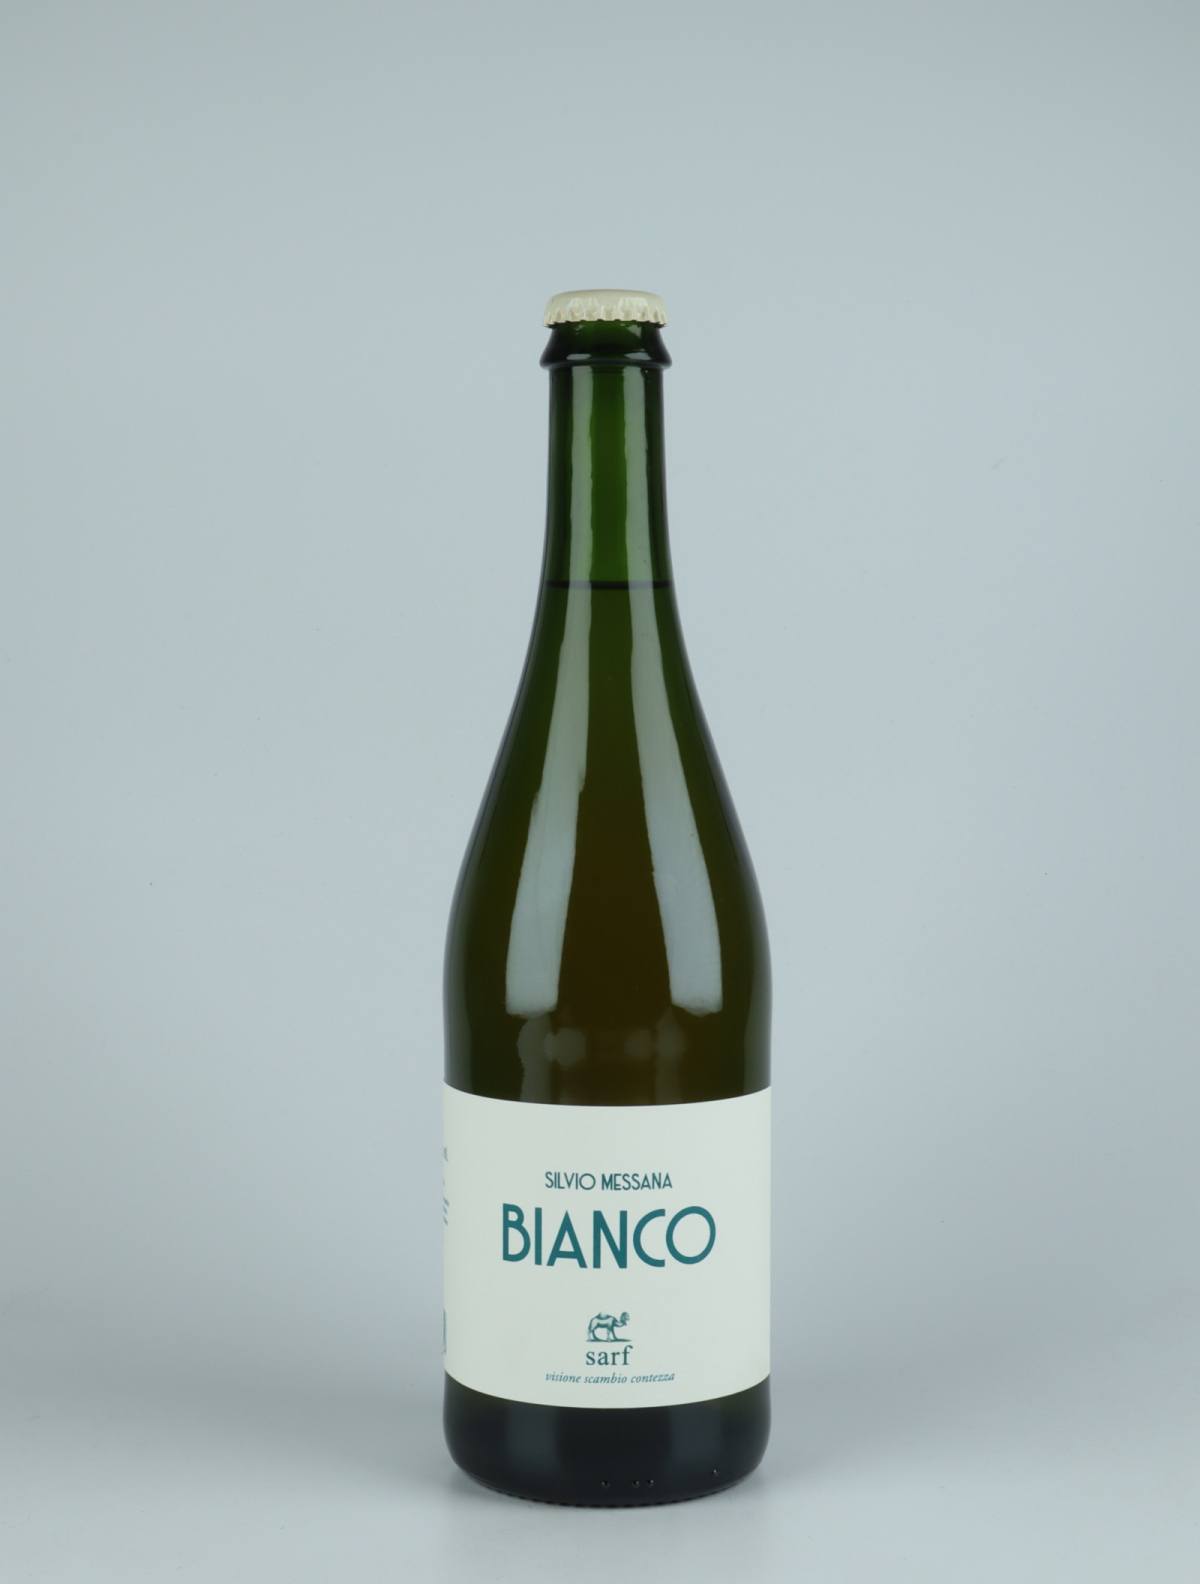 En flaske 2020 Bianco Orange vin fra Silvio Messana, Toscana i Italien